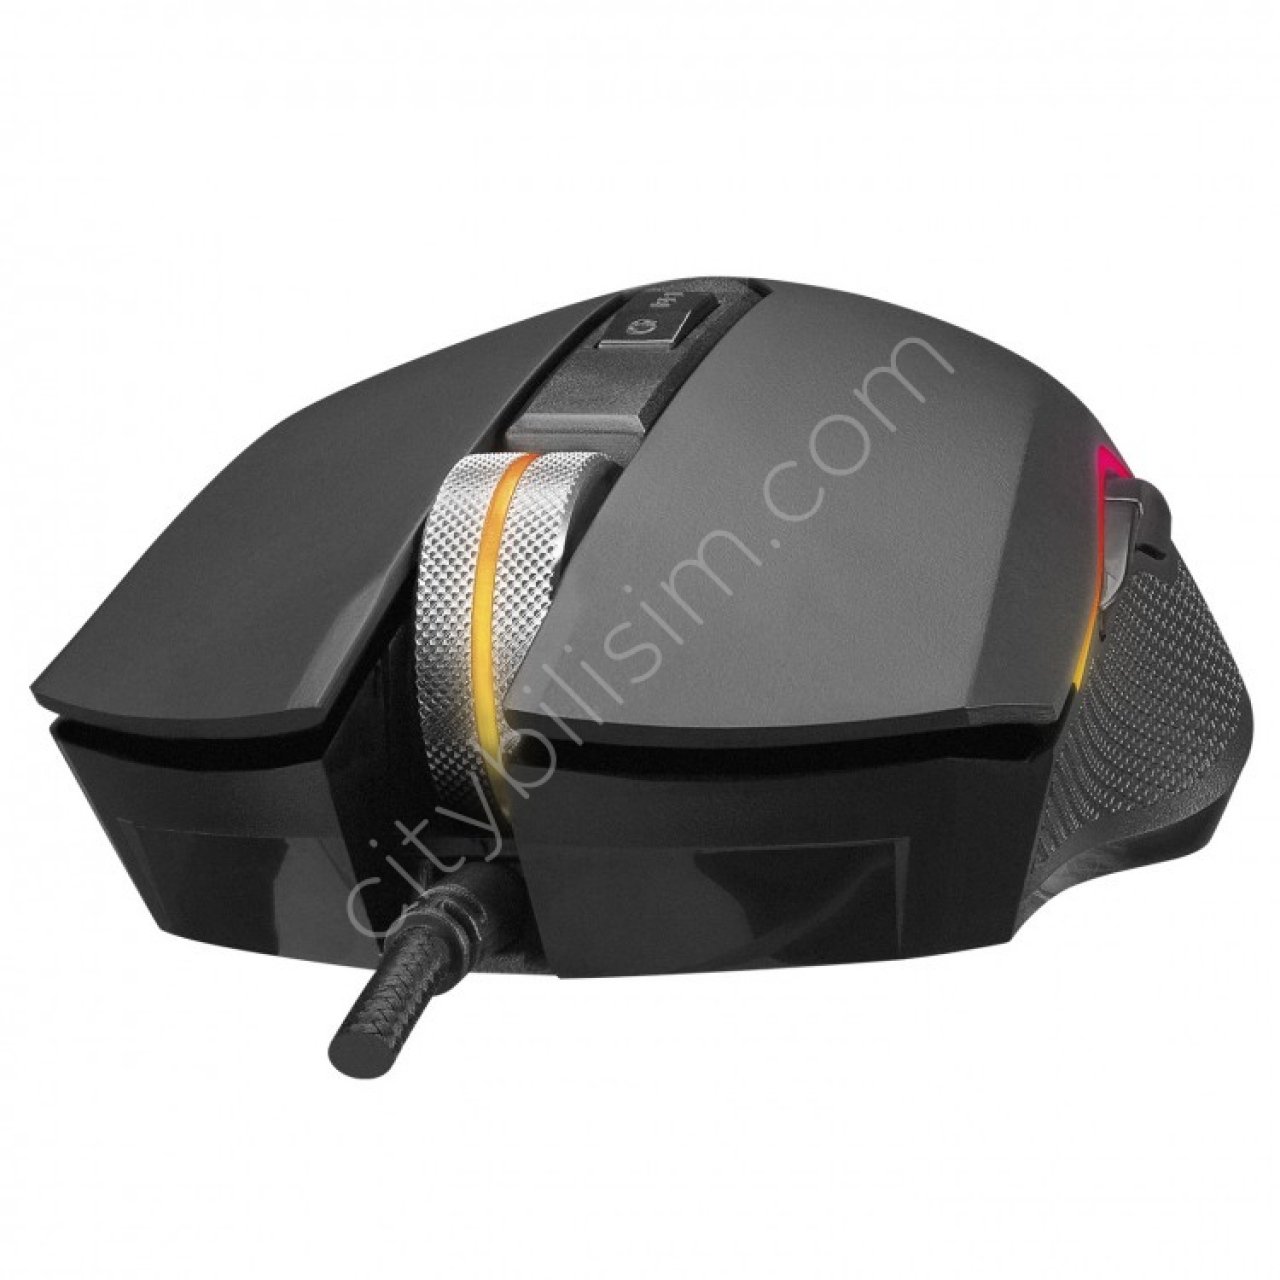 Everest Sm-f09 Tıtanıo Usb Gümüş 7200dpi Rgb Ledli Gaming Oyuncu Mouse